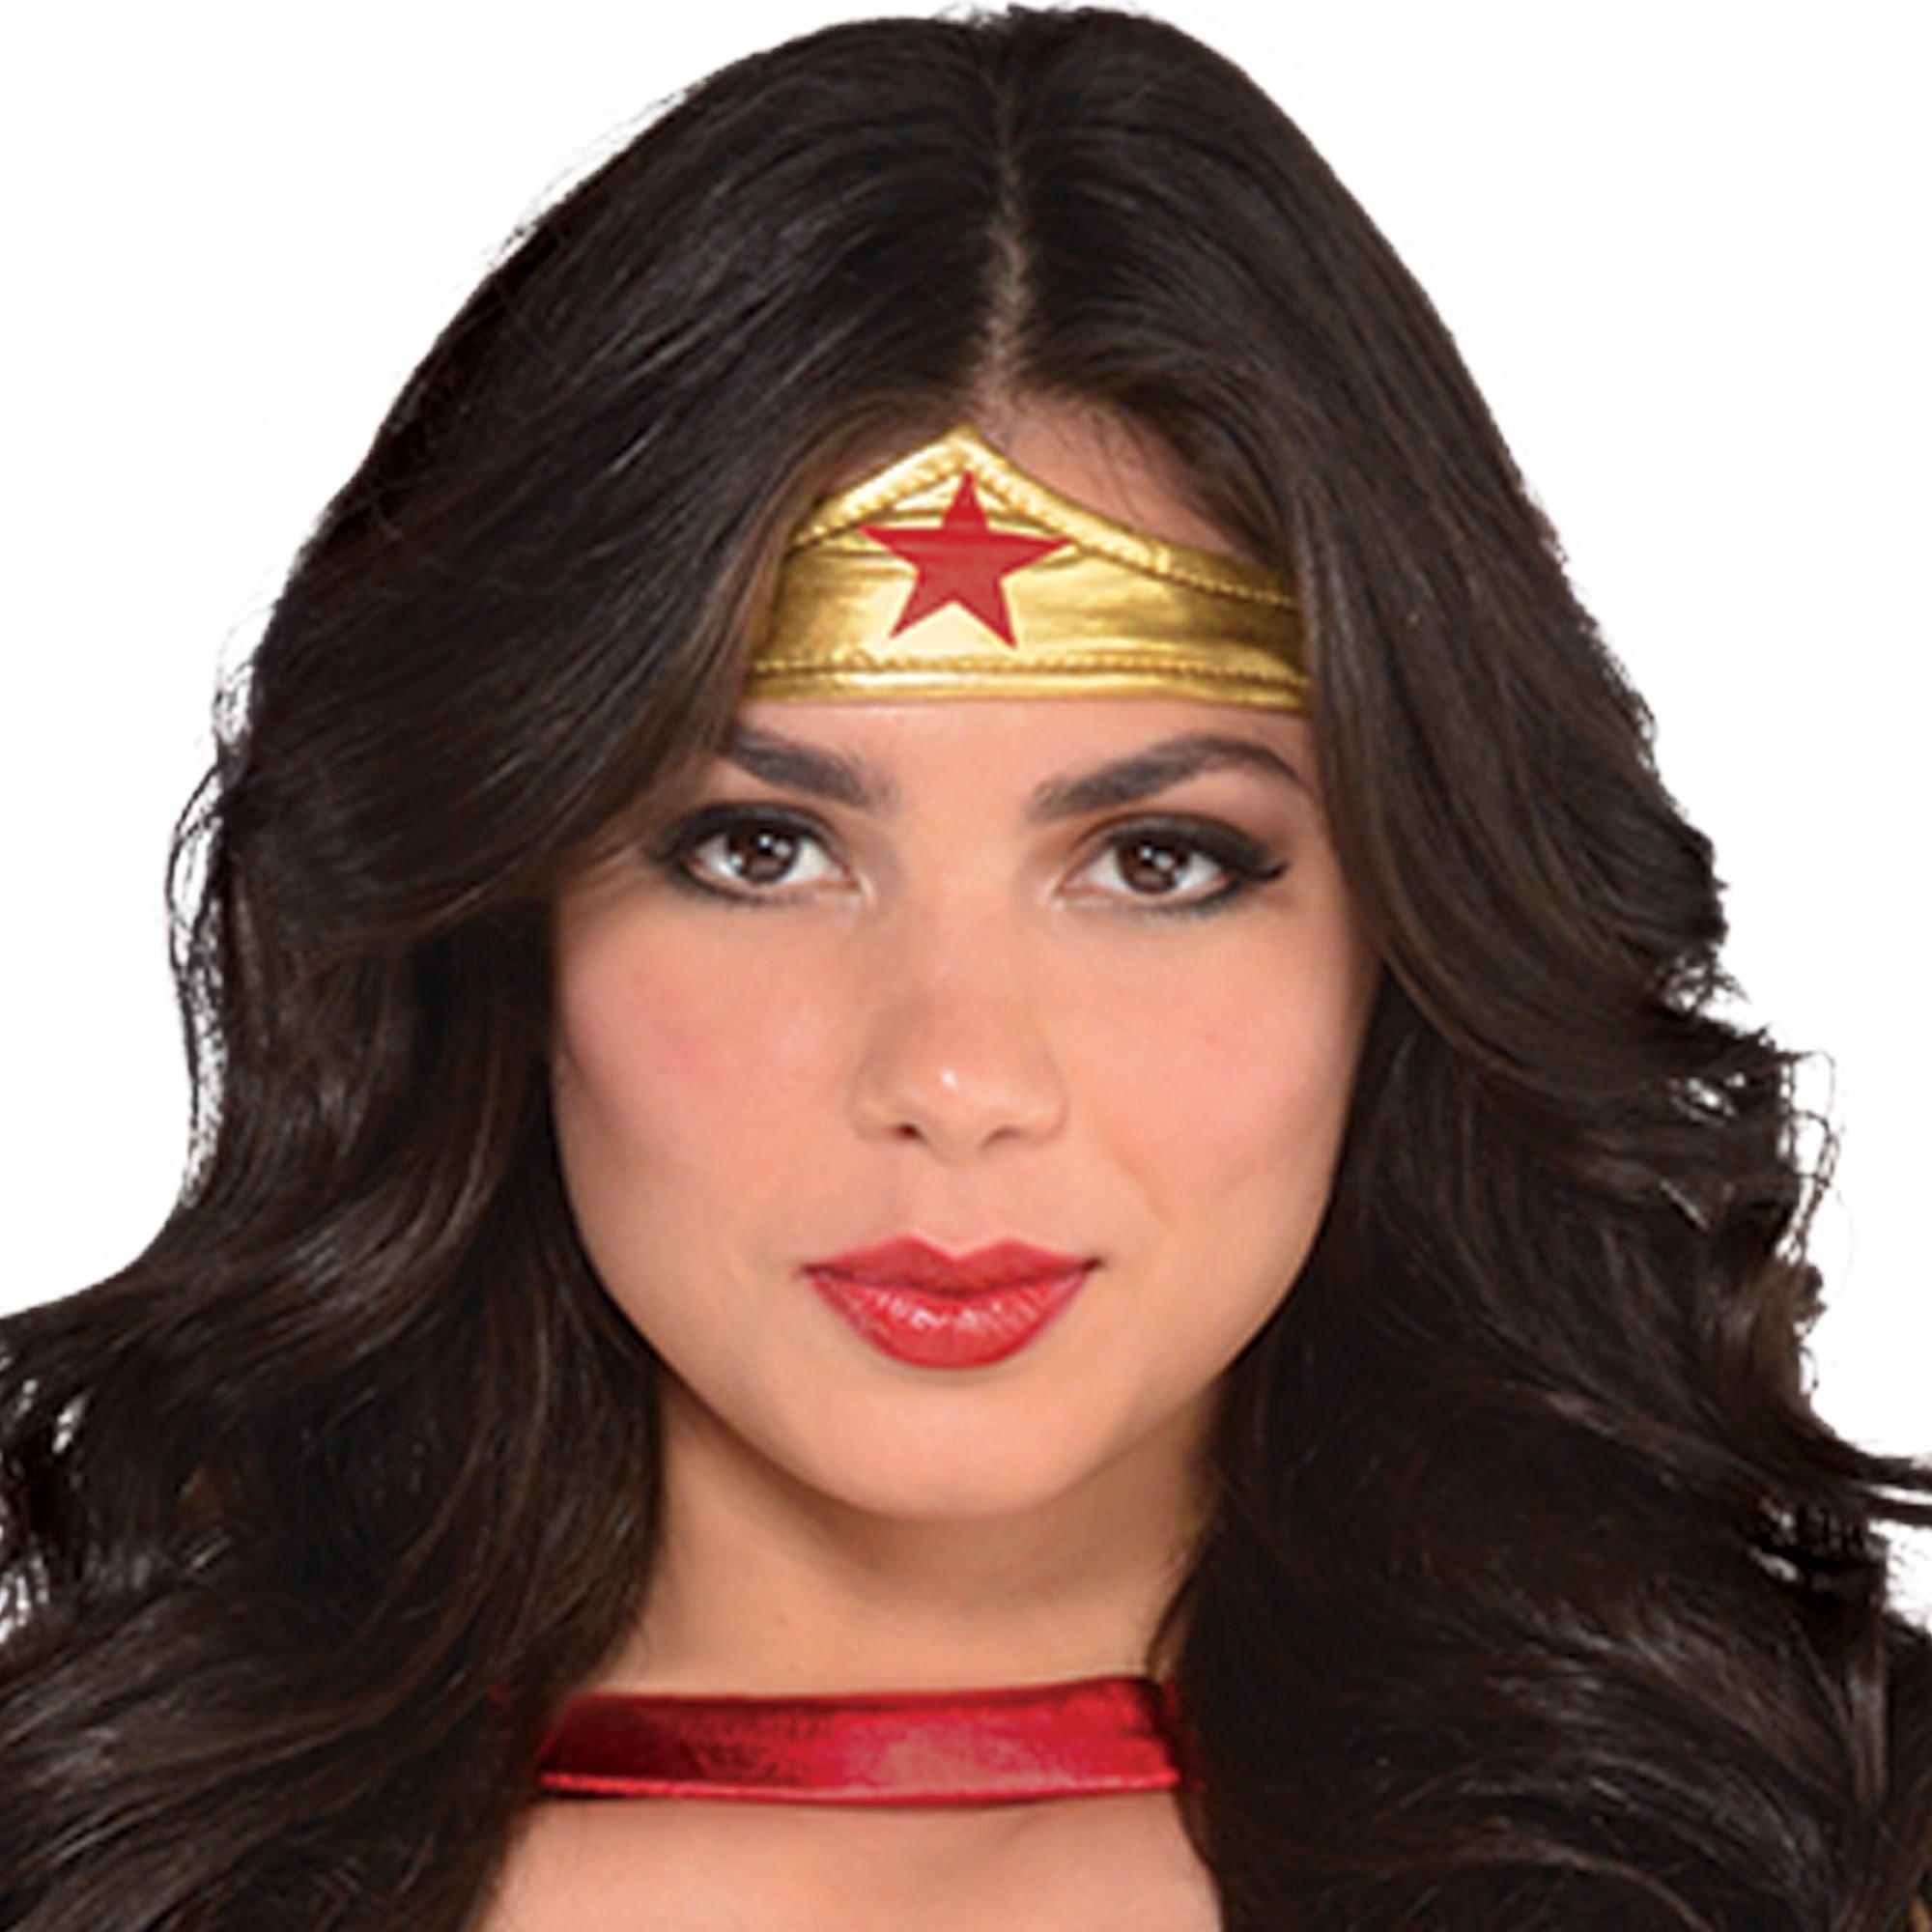 Wonder Woman Woman's Adult Costume